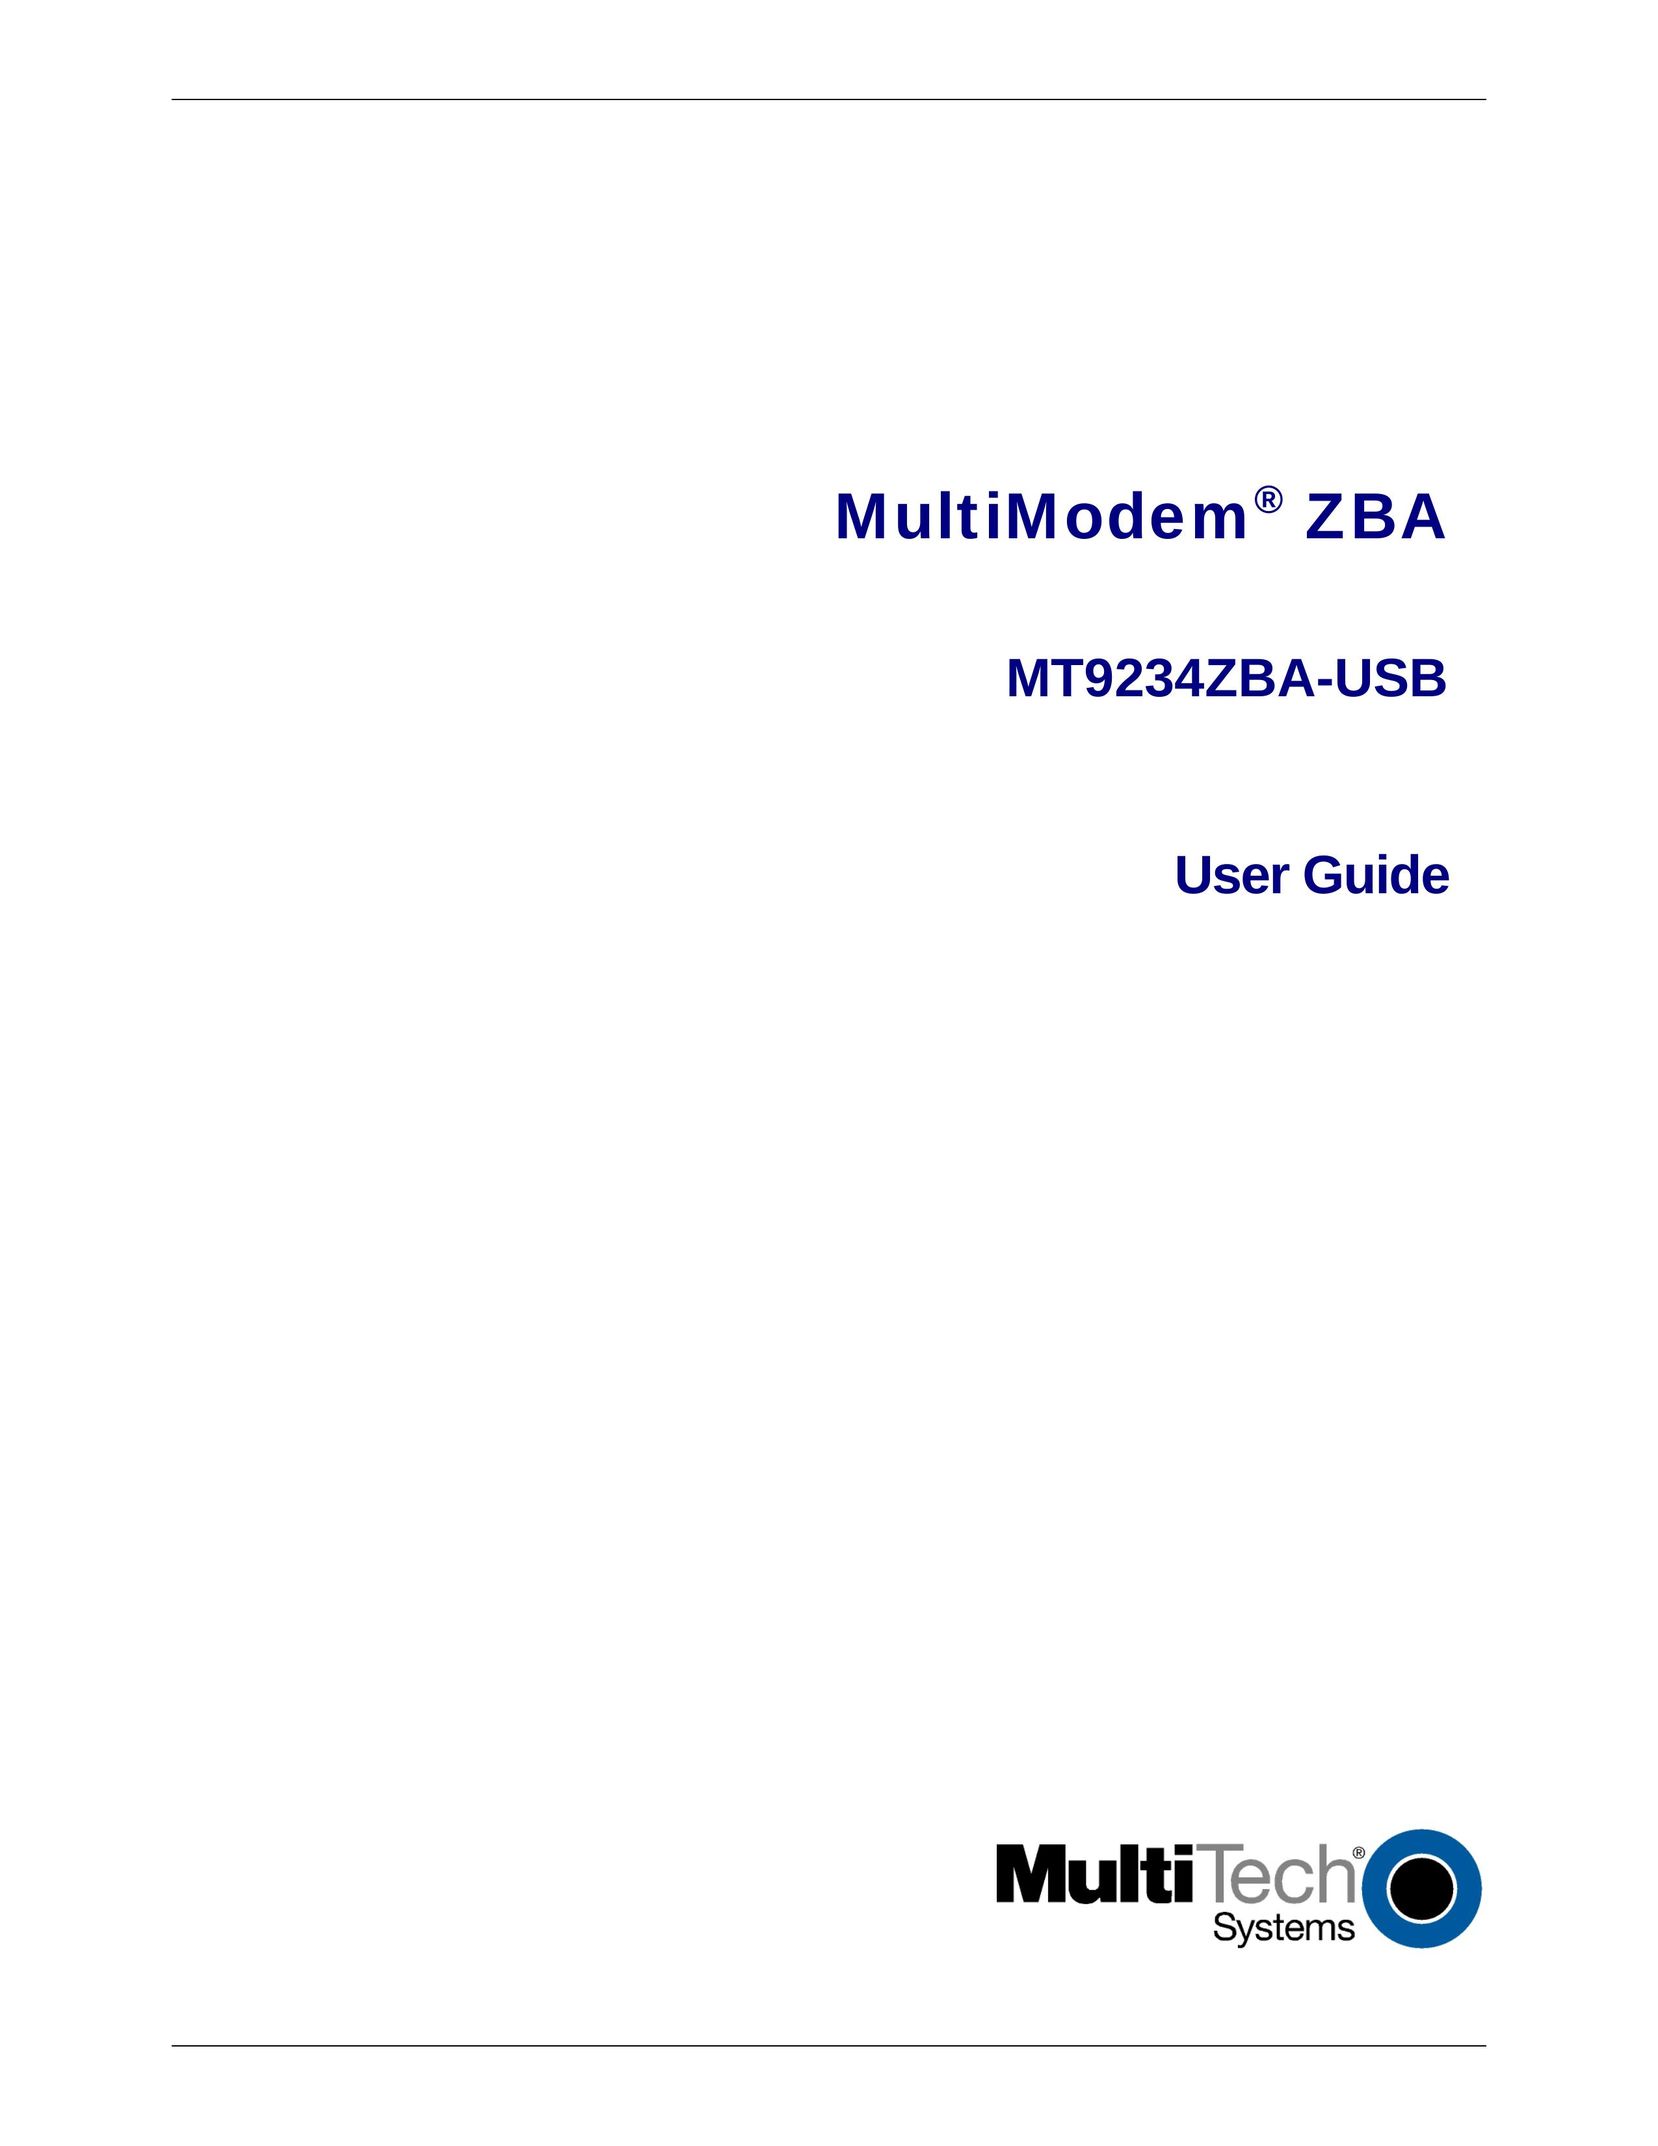 Multi-Tech Systems MT9234ZBA-USB Modem User Manual